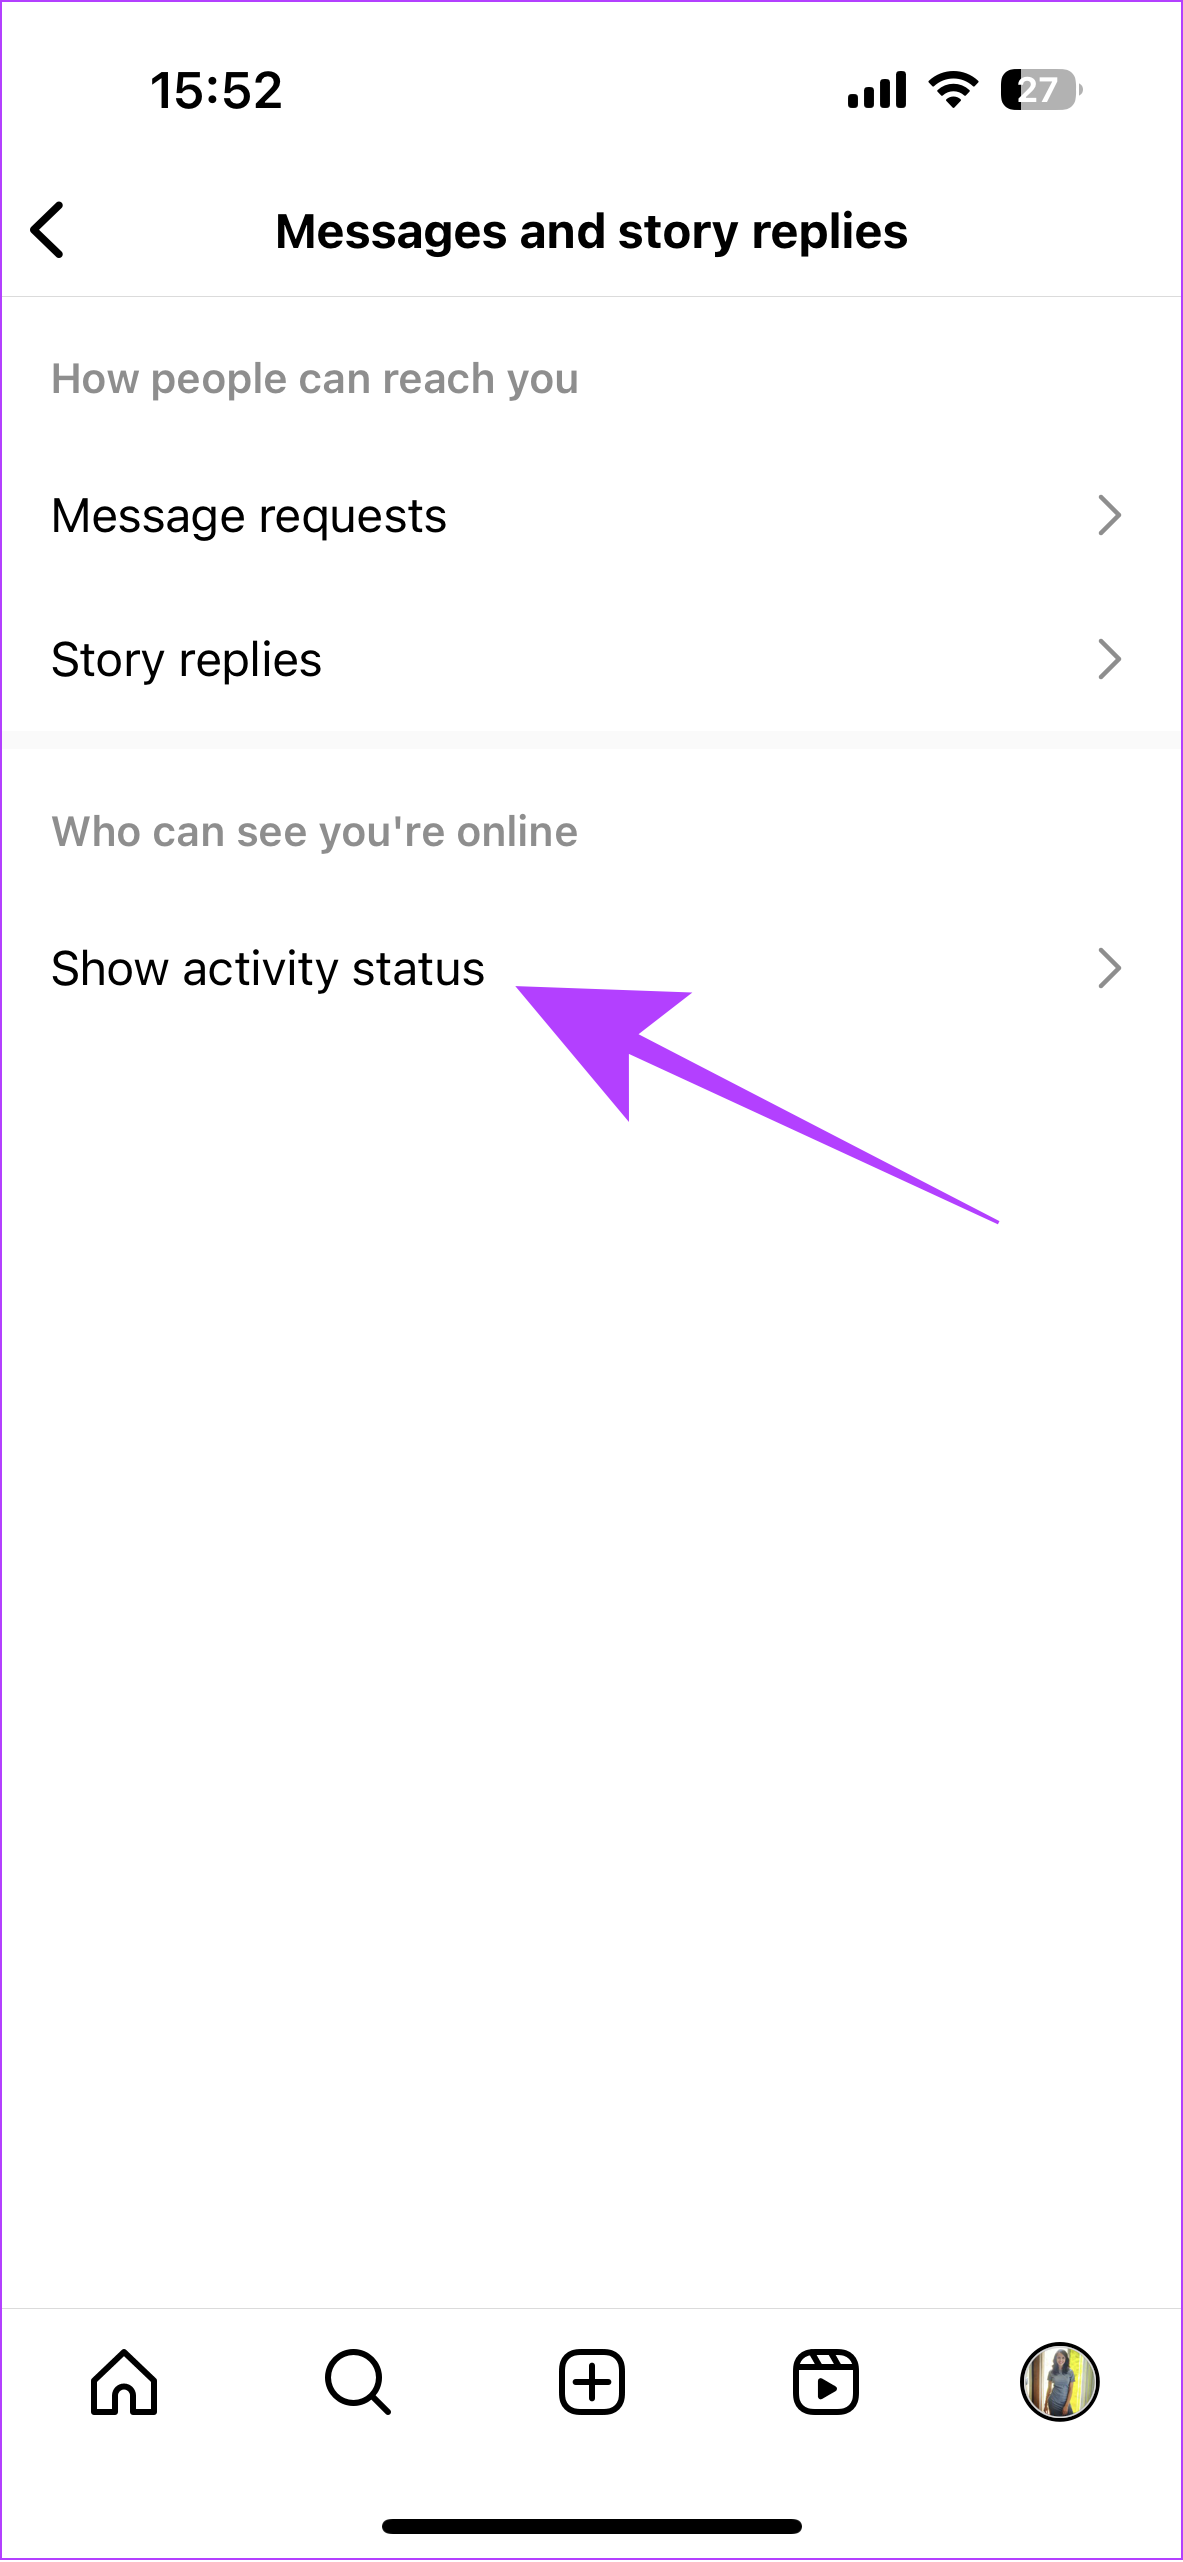 tap show activity status